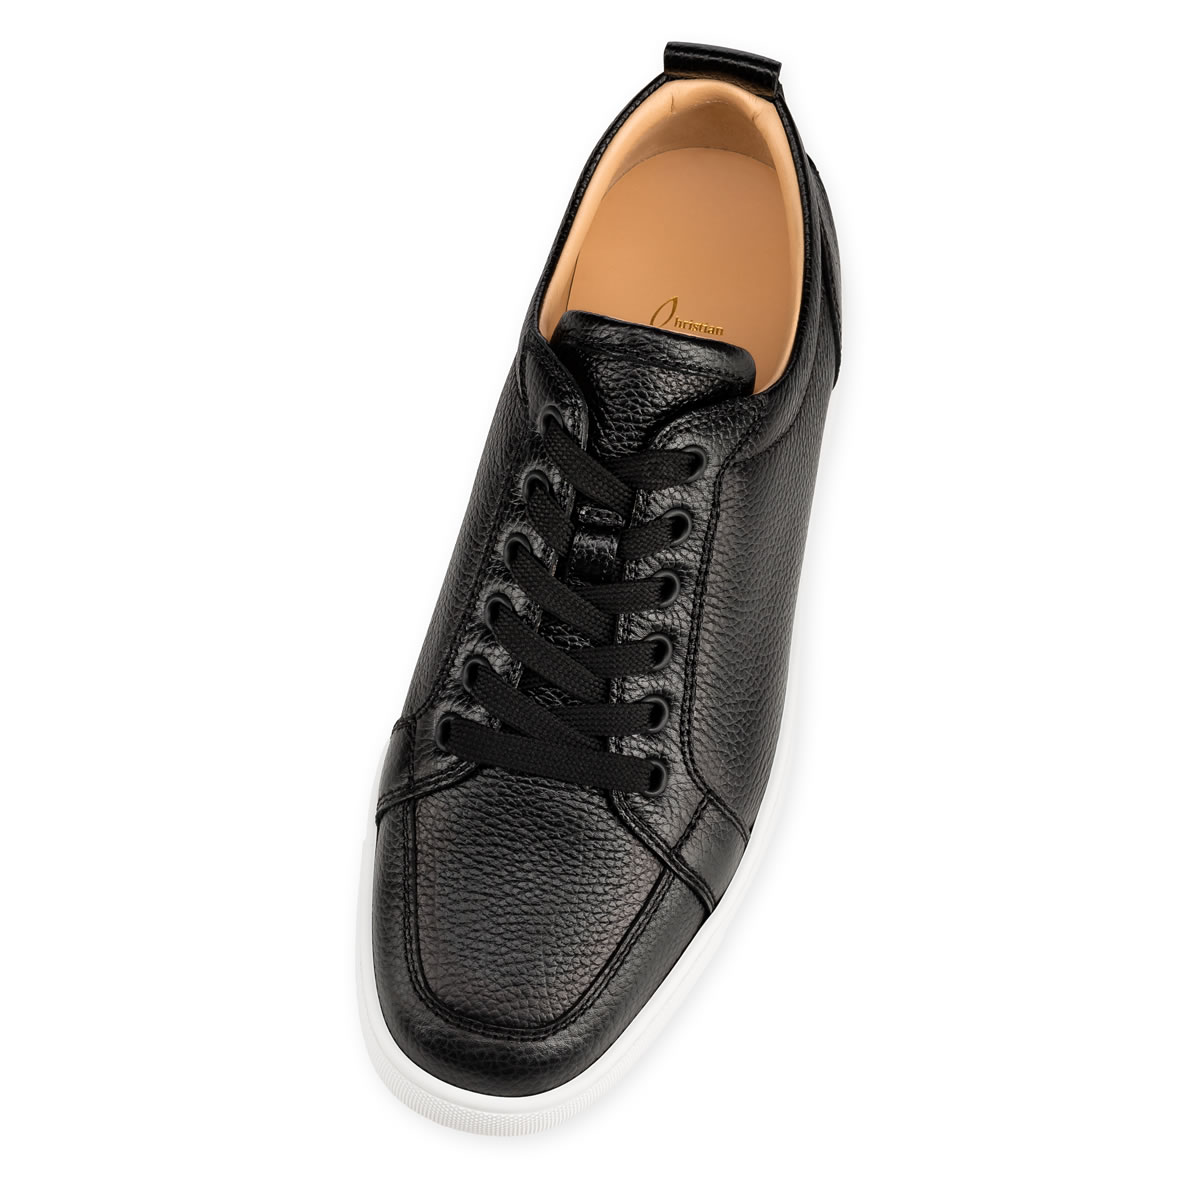 Christian Louboutin Rantulow Flat Leather Sneakers